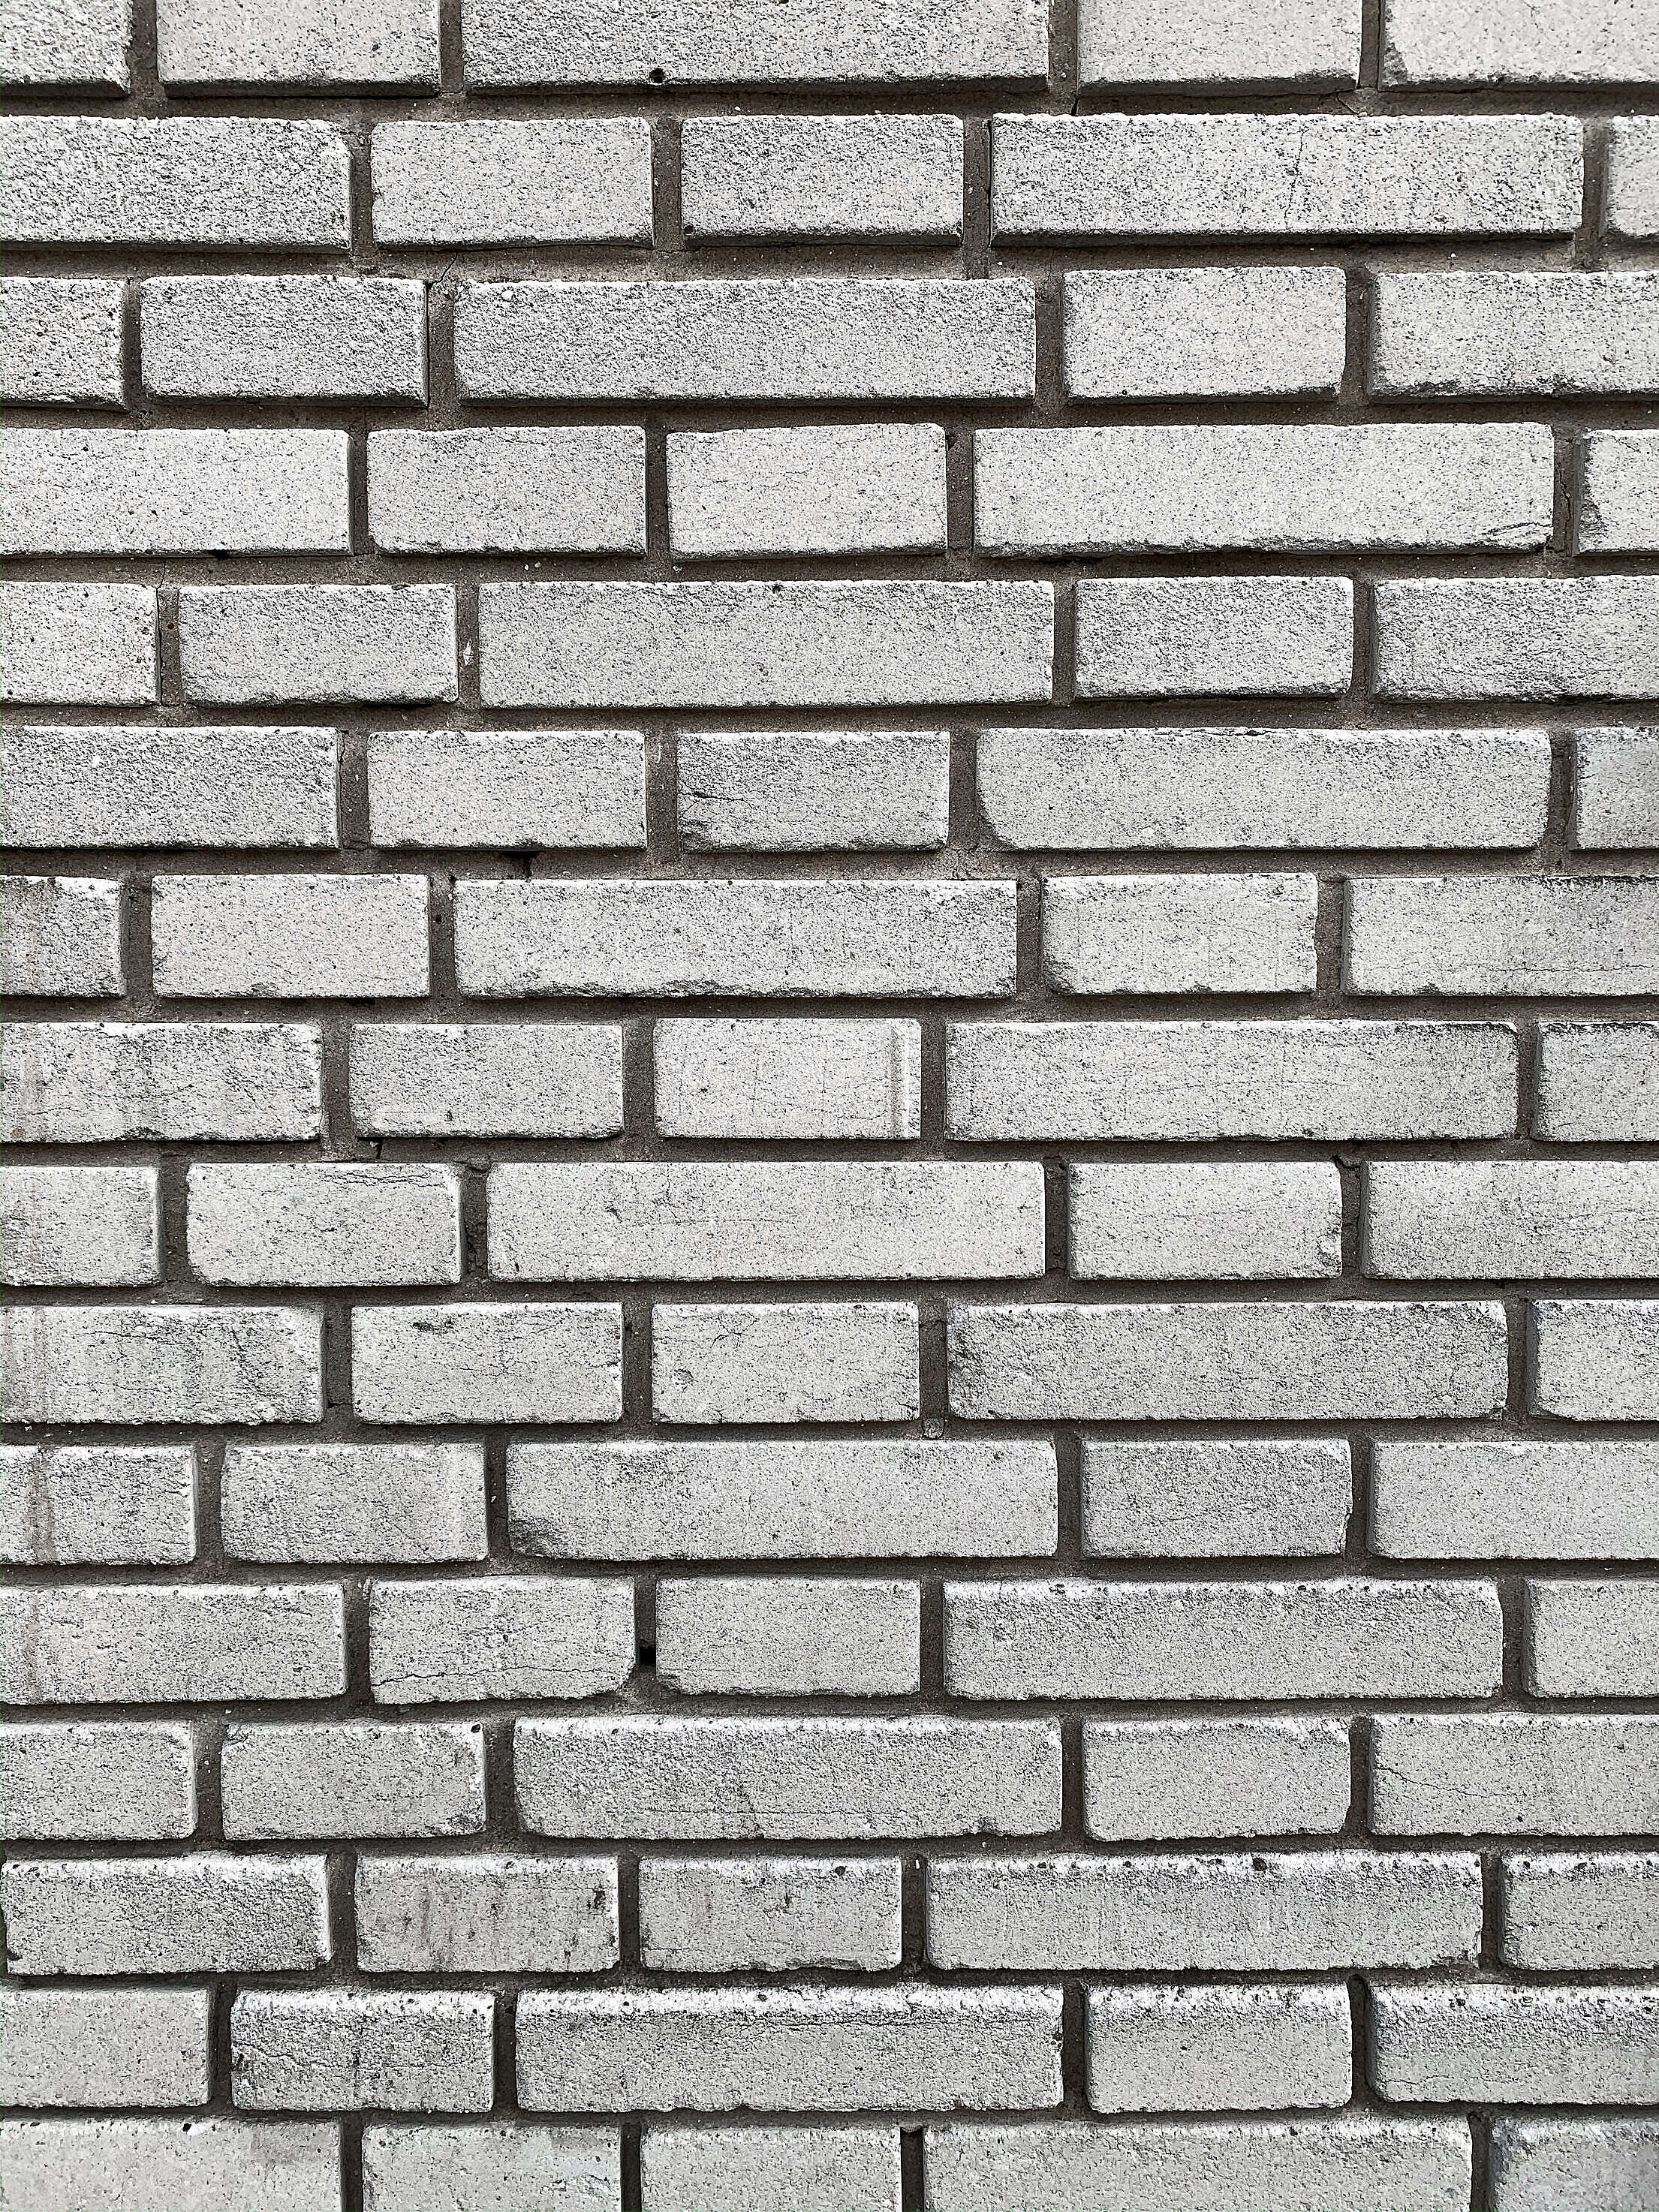 Gray Brick Wall Background Free Stock Photo